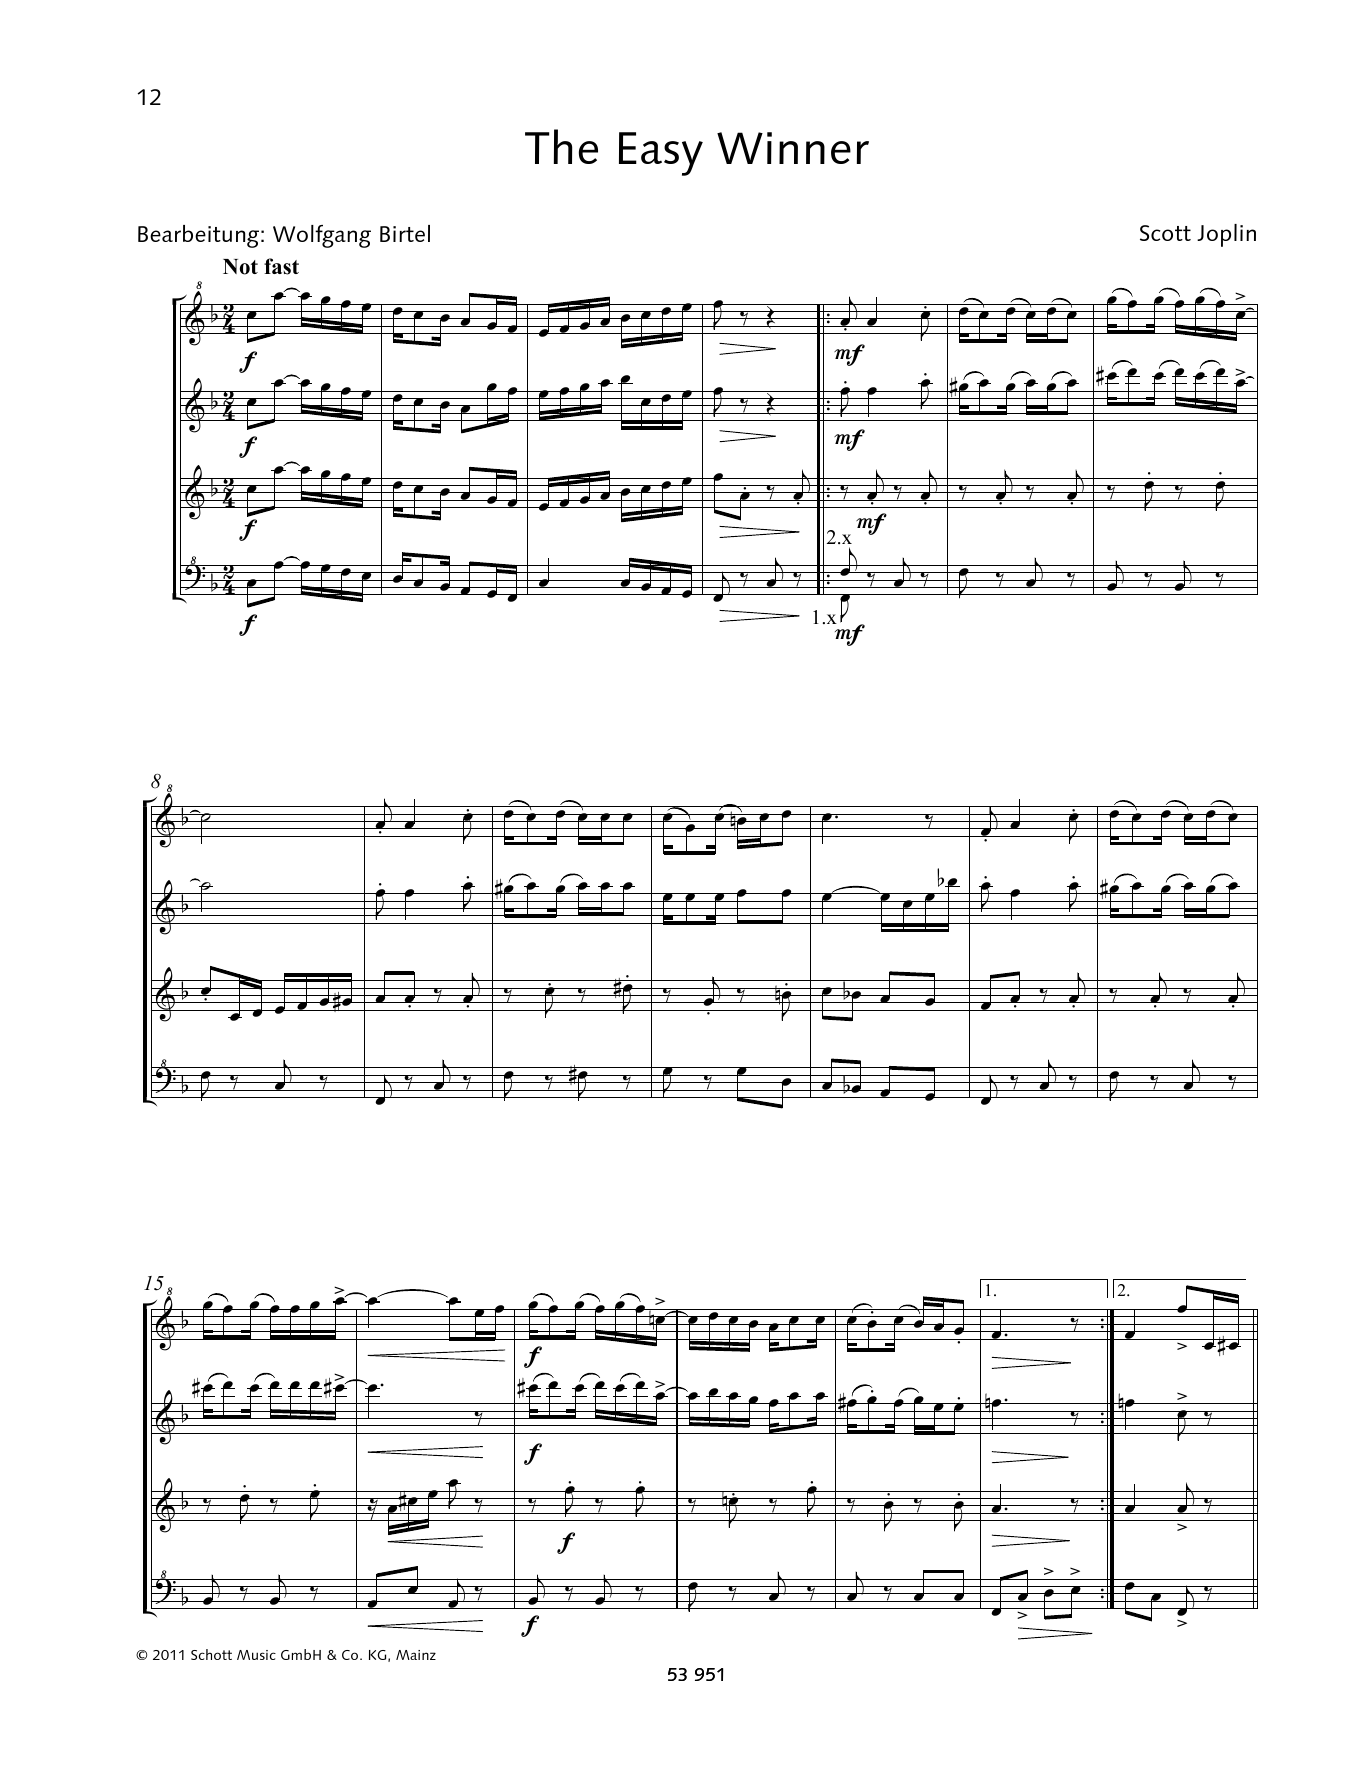 Download Scott Joplin The Easy Winner Sheet Music and learn how to play Woodwind Ensemble PDF digital score in minutes